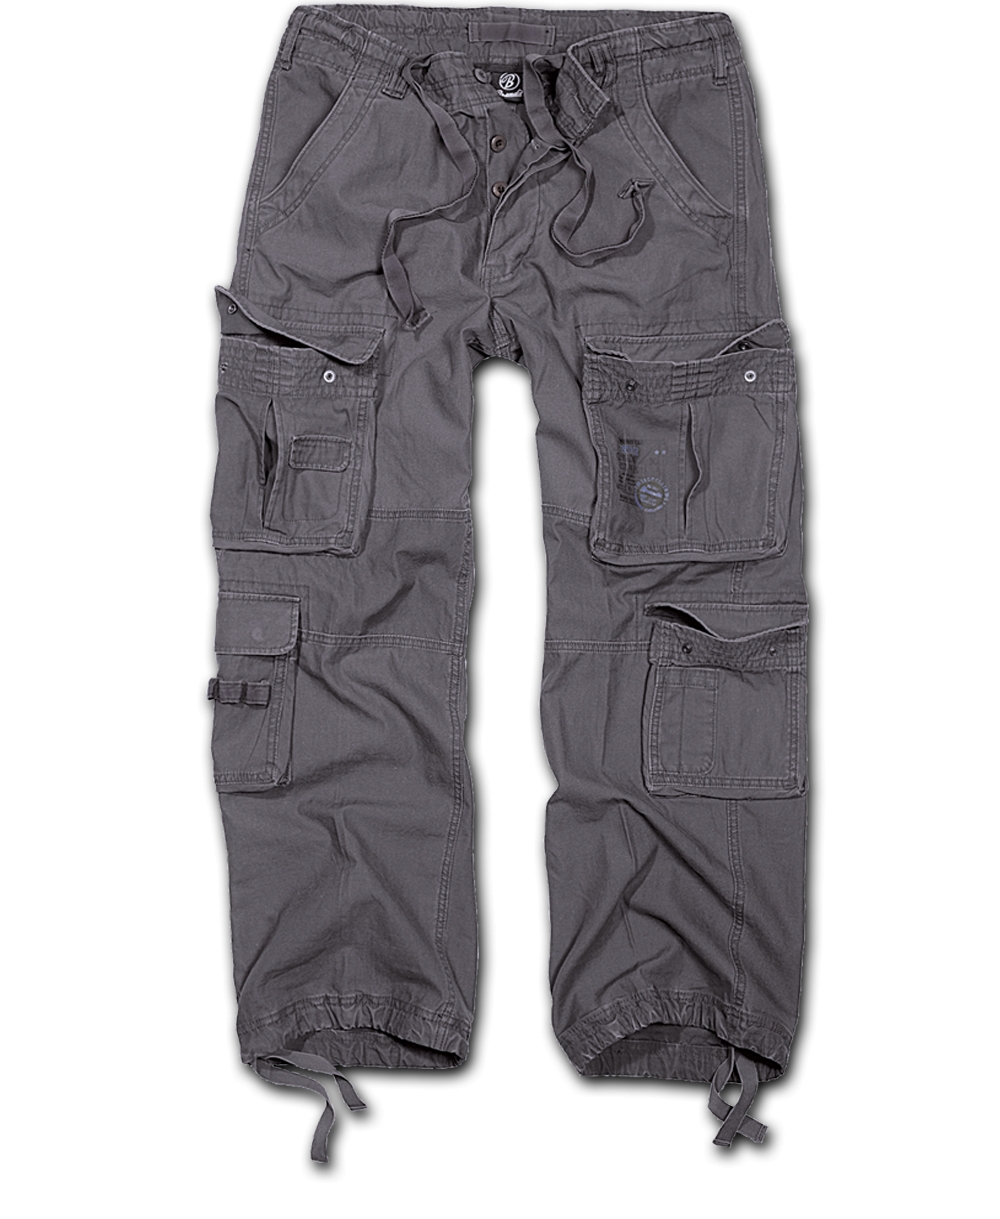 Kalhoty Brandit Pure Vintage - antracitové, 6XL